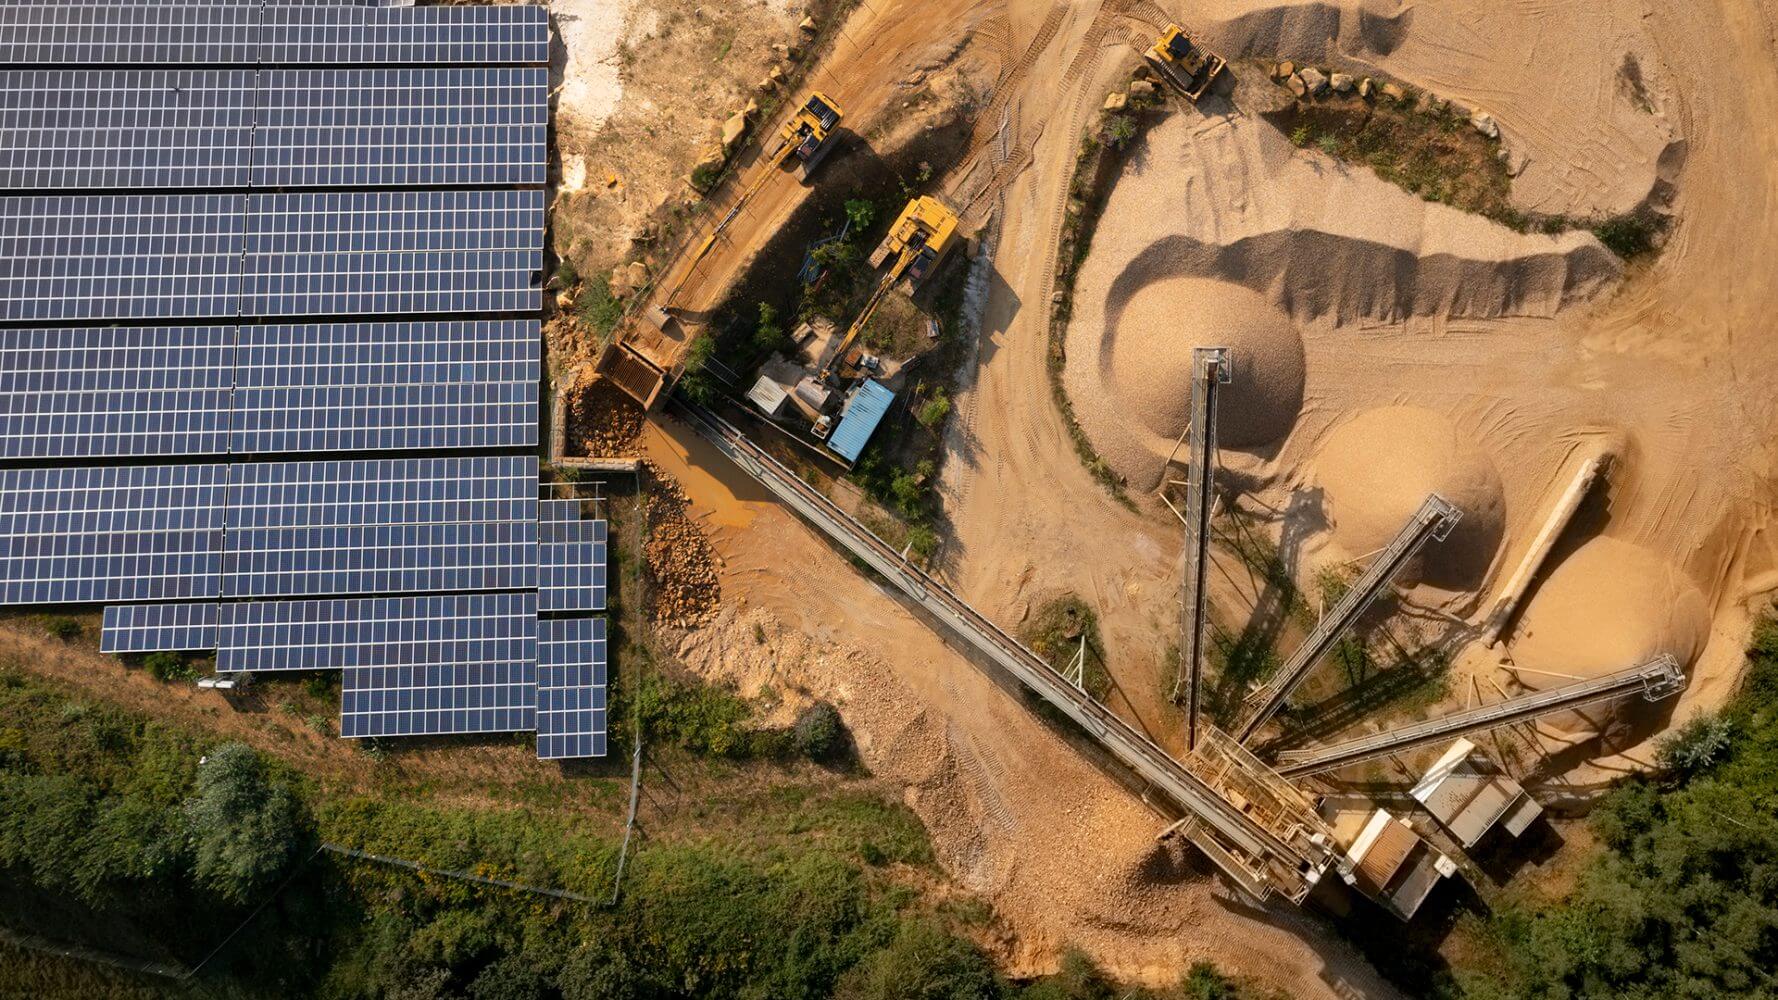 Germany, Herzogenrath, Overhead view of solar panels at sand mine